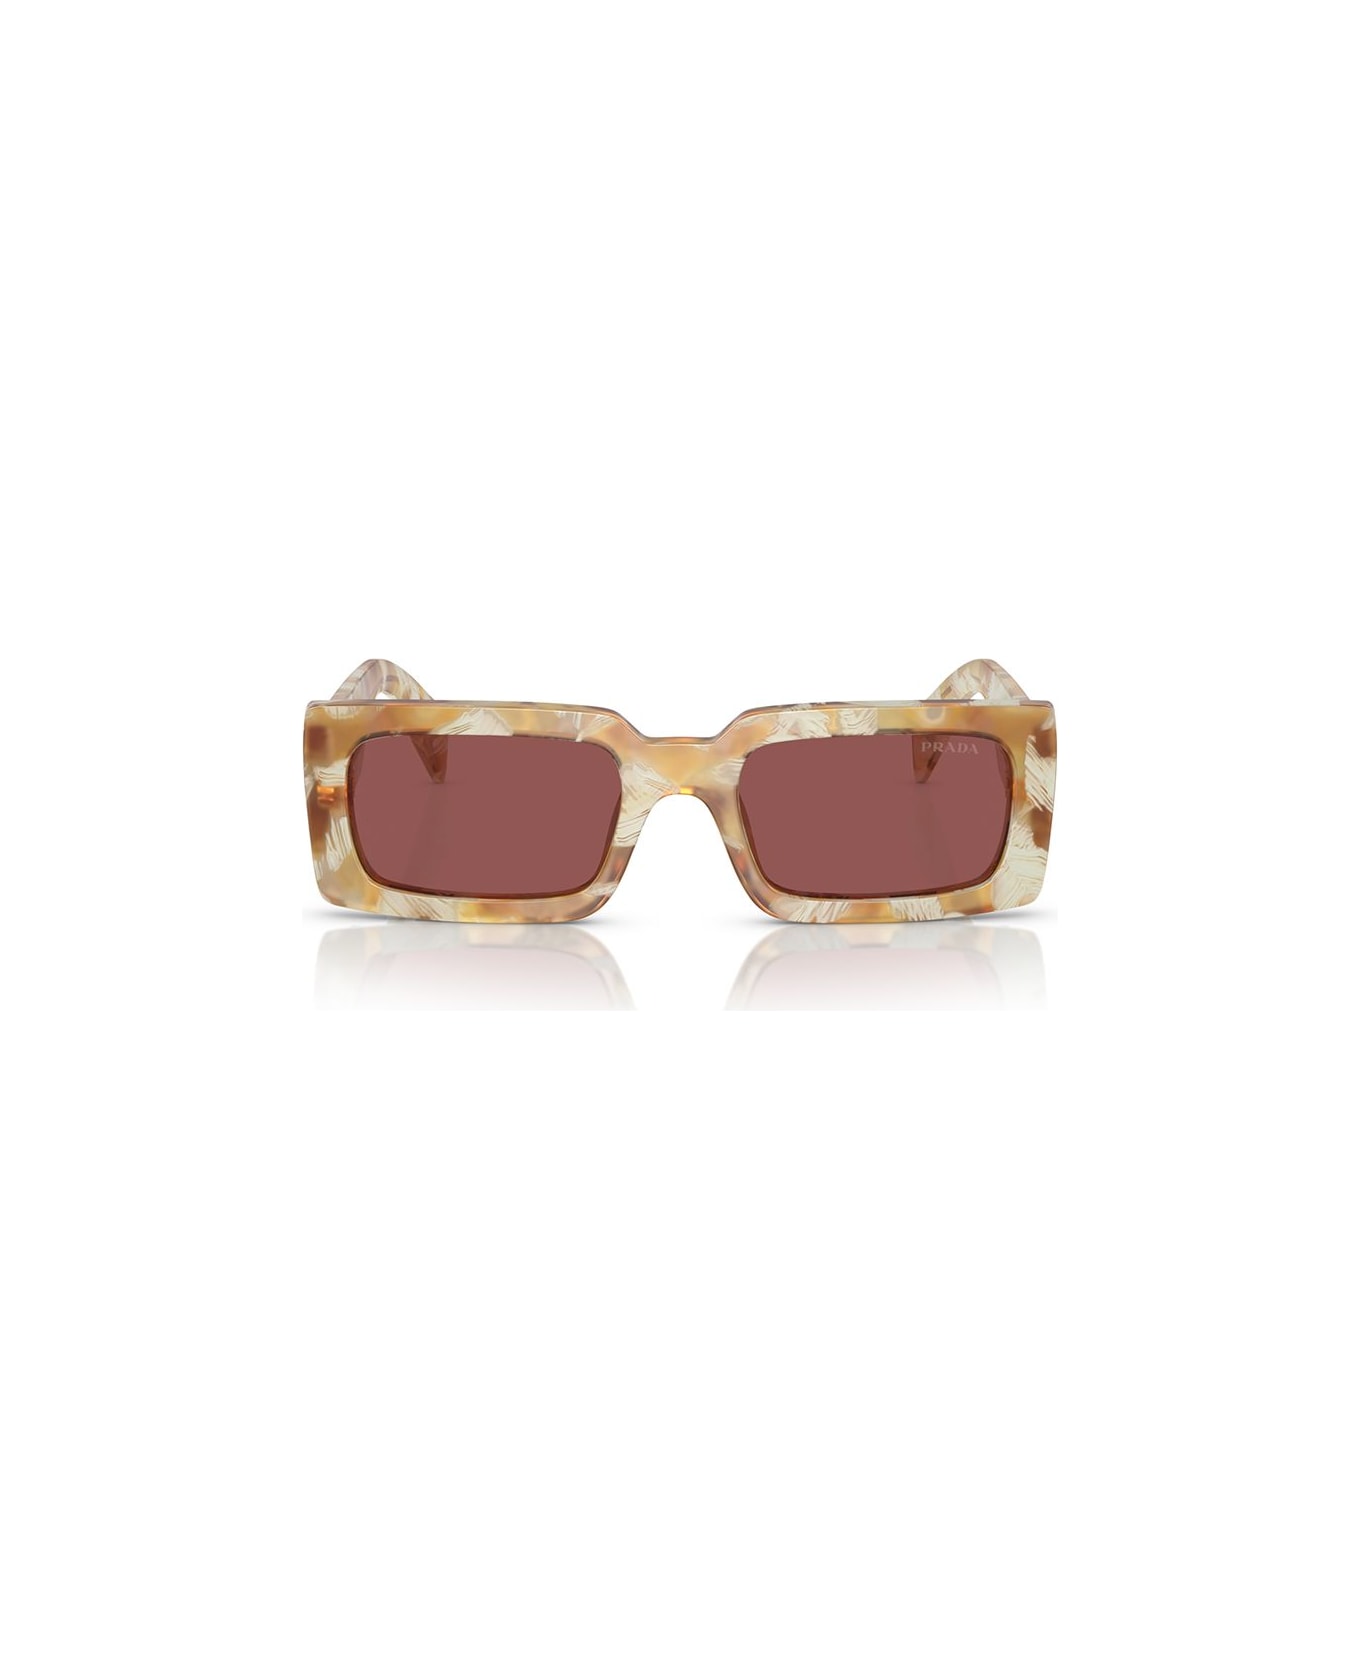 Prada Eyewear Sunglasses - 19N08S